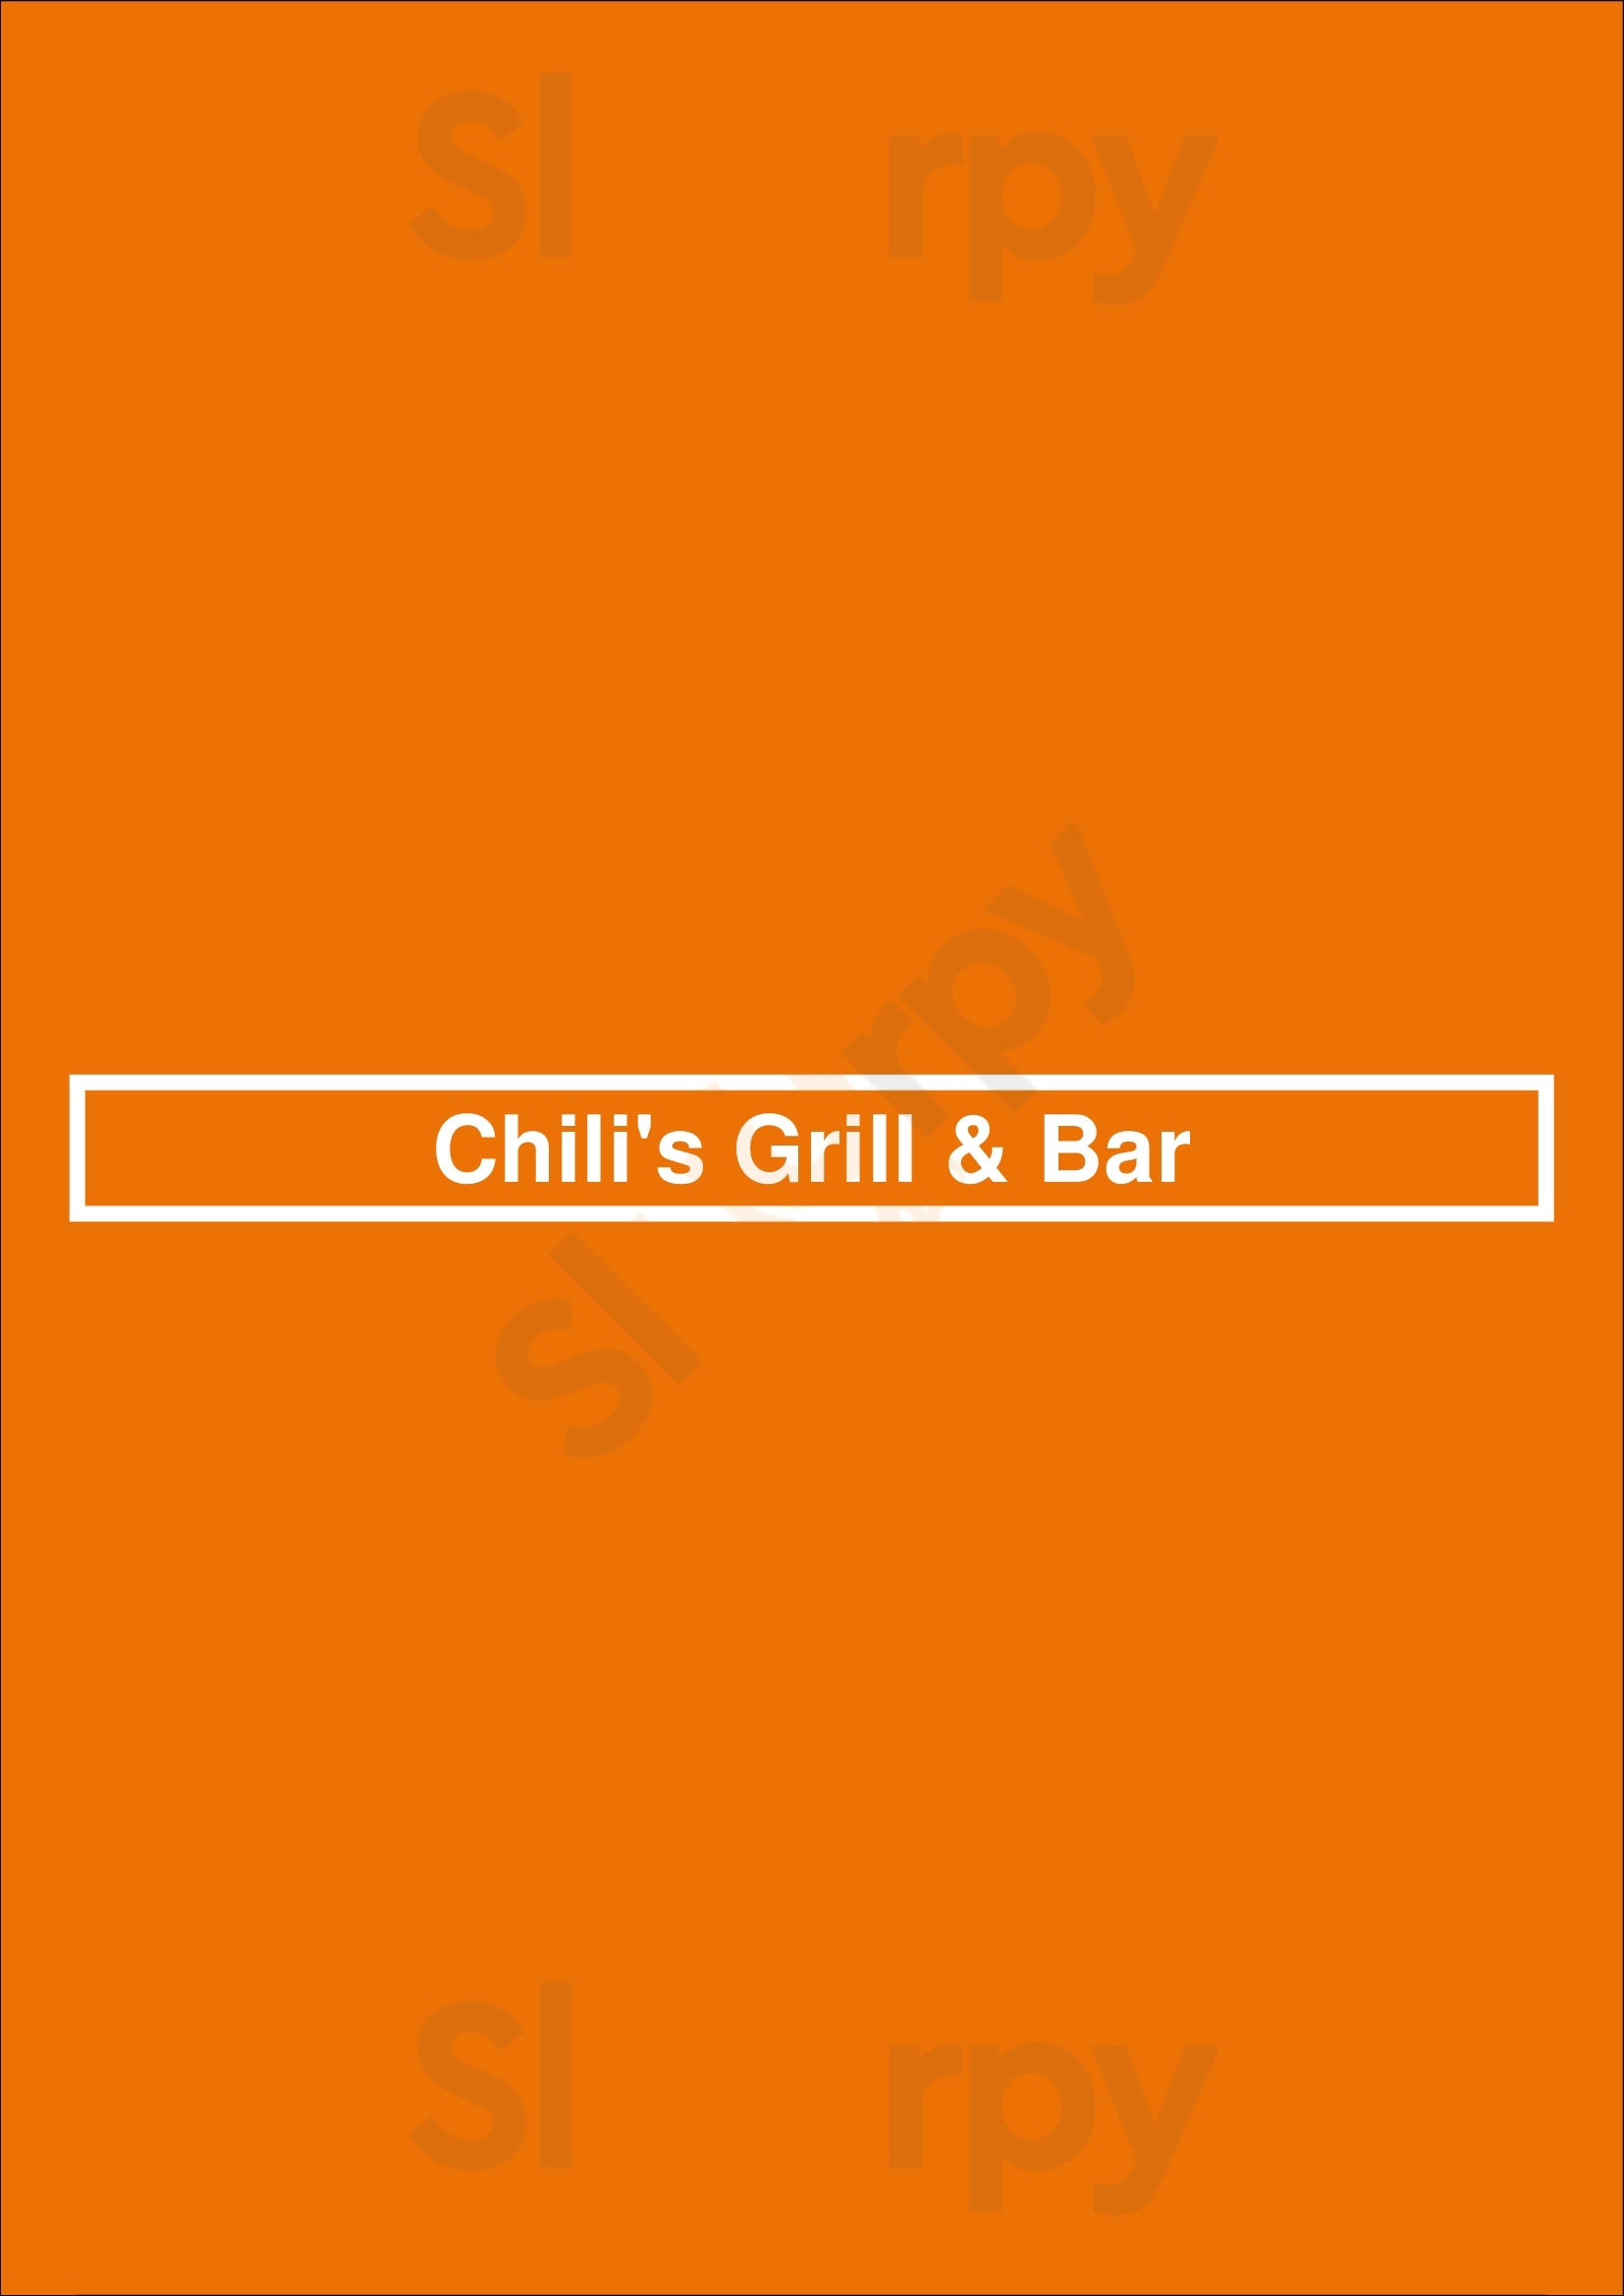 Chili's Grill & Bar Baton Rouge Menu - 1